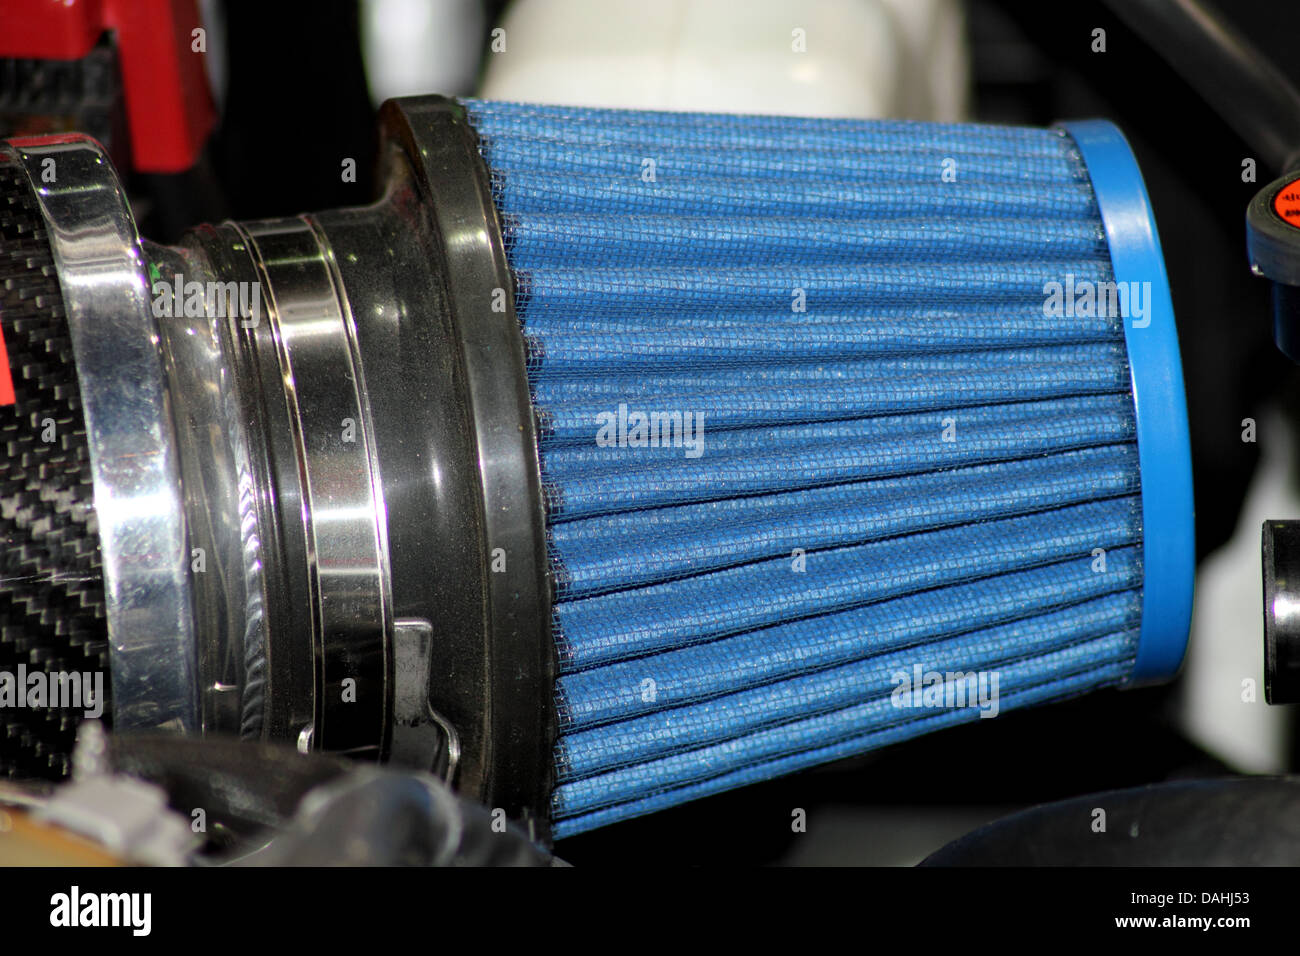 Ein Komponenten-Motortuning Auto Luftfilter Stockfotografie - Alamy